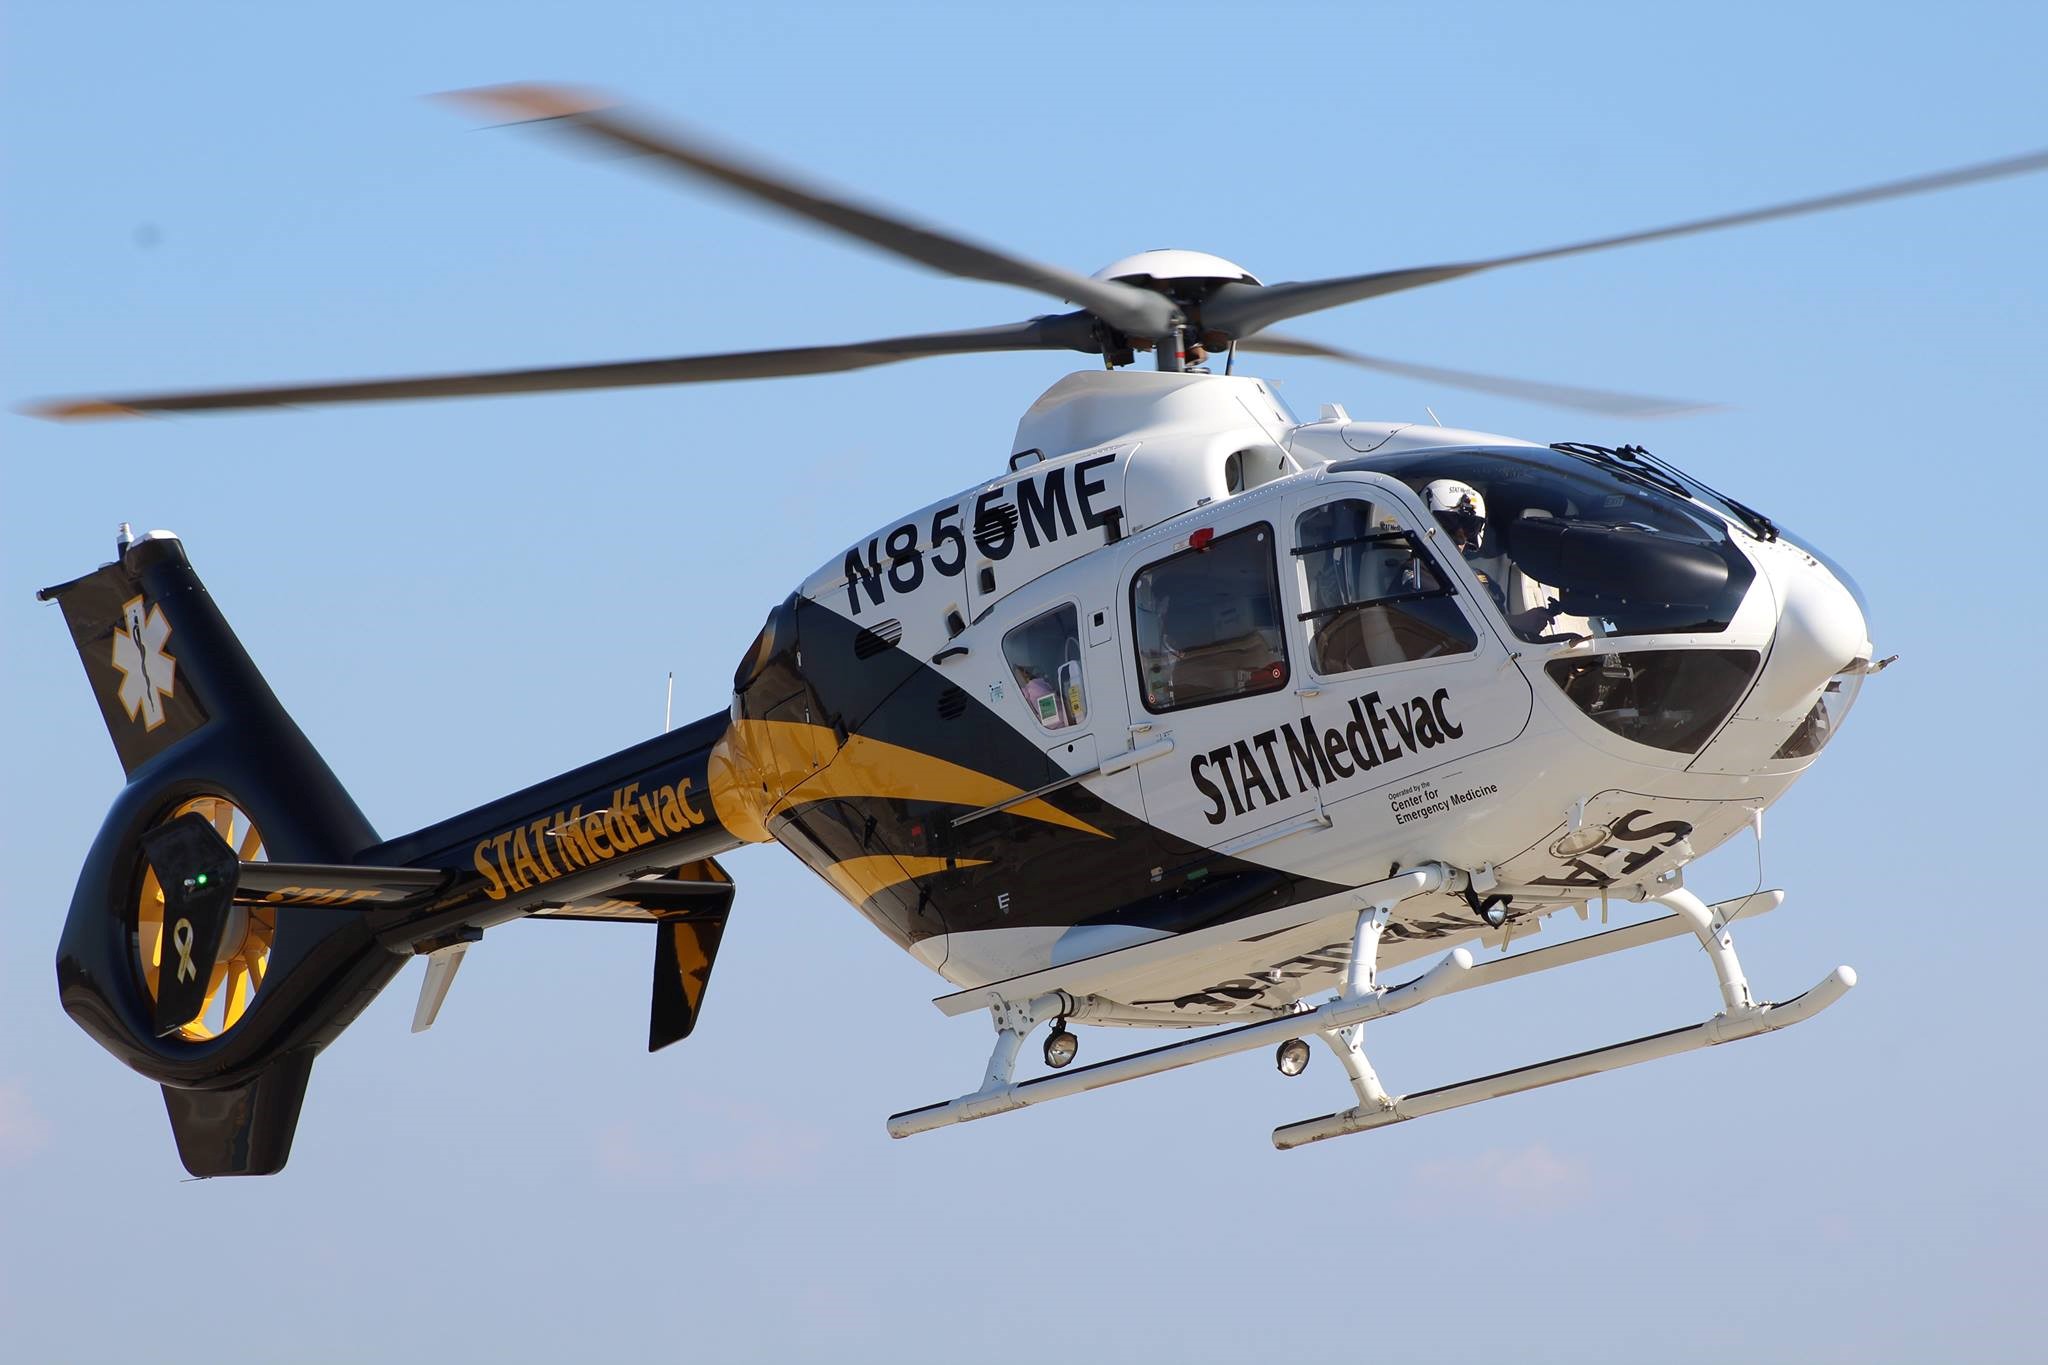 STAT Medevac helicopter in flight